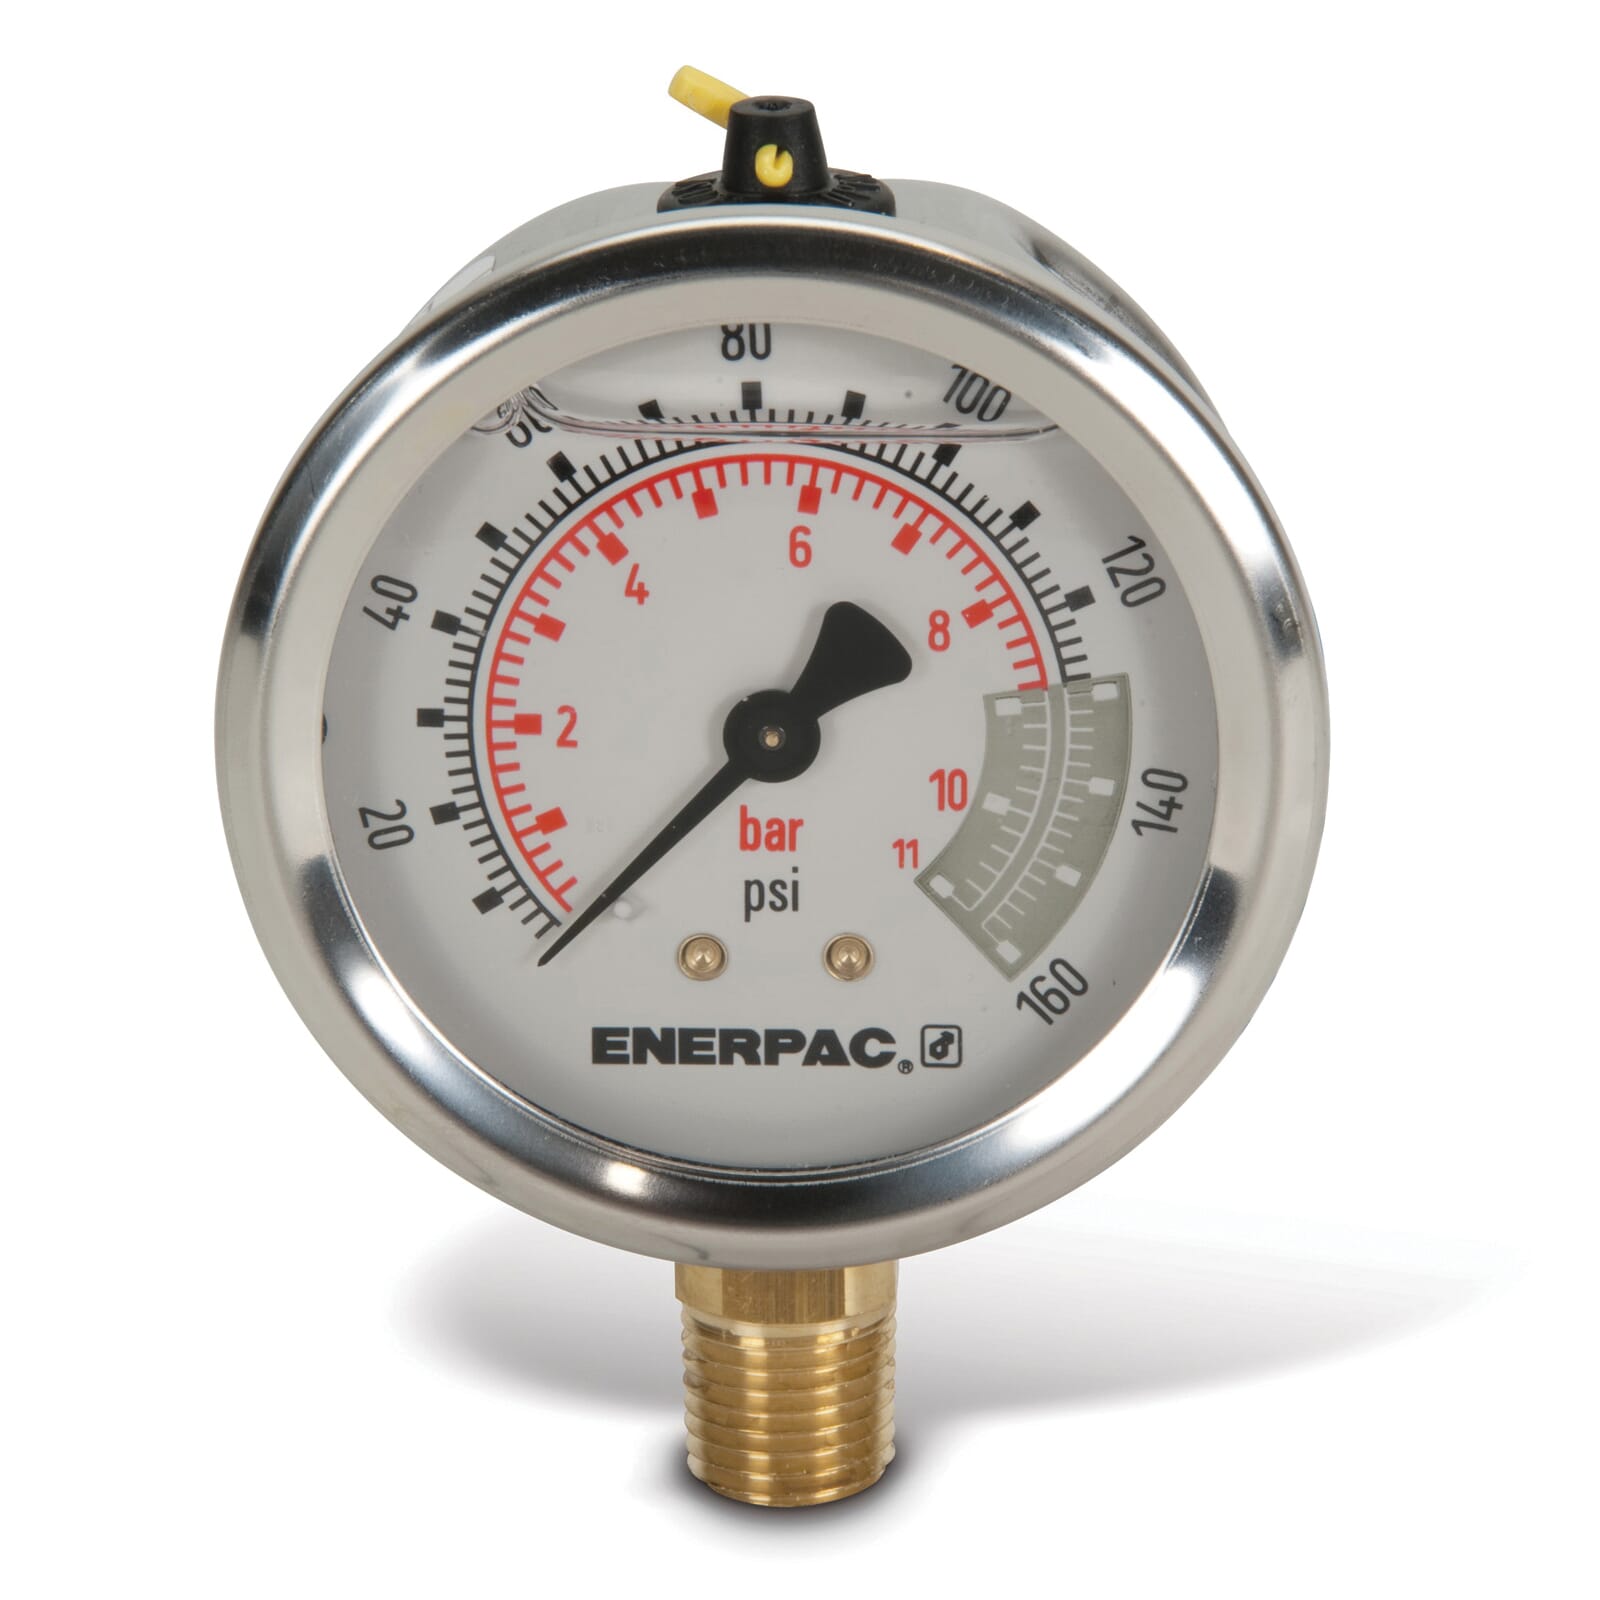 Details about   Enerpac Pressure Gauge Dual 0-160 PSI 0-1100 kPa Bottom Mount 